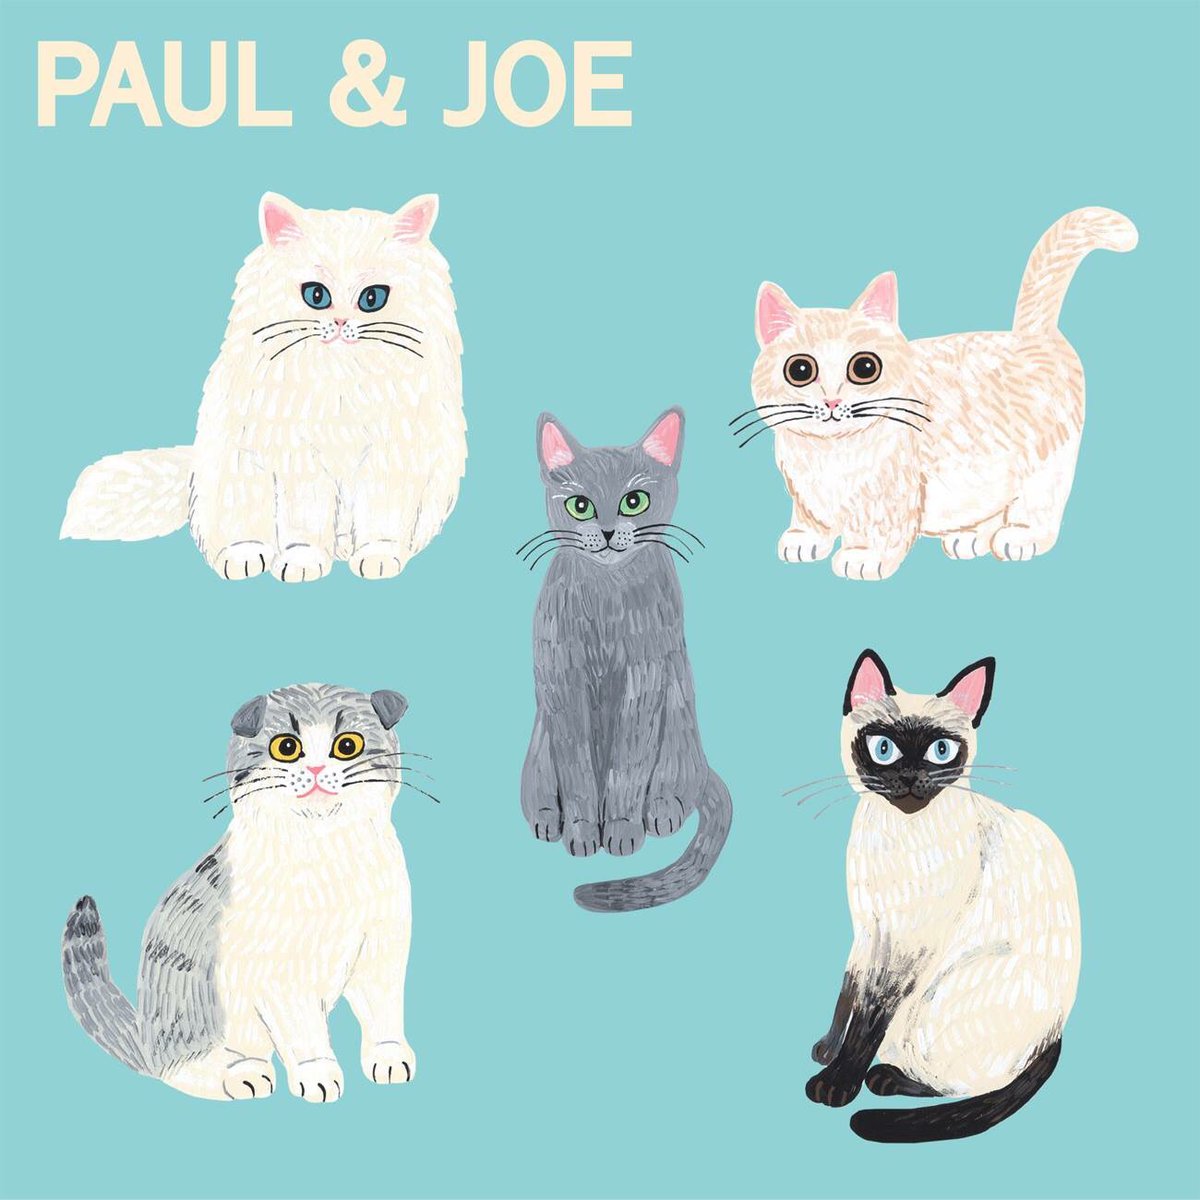 O Xrhsths Paul Joe Beaute Jp Sto Twitter 友達と一緒にやってみて Paul Joe 猫診断 質問に答えてあなたの 猫 タイプを診断します 人気の プライマー のサンプルの プレゼント も T Co Viob5ggdhf ポールアンドジョー ポールアンド